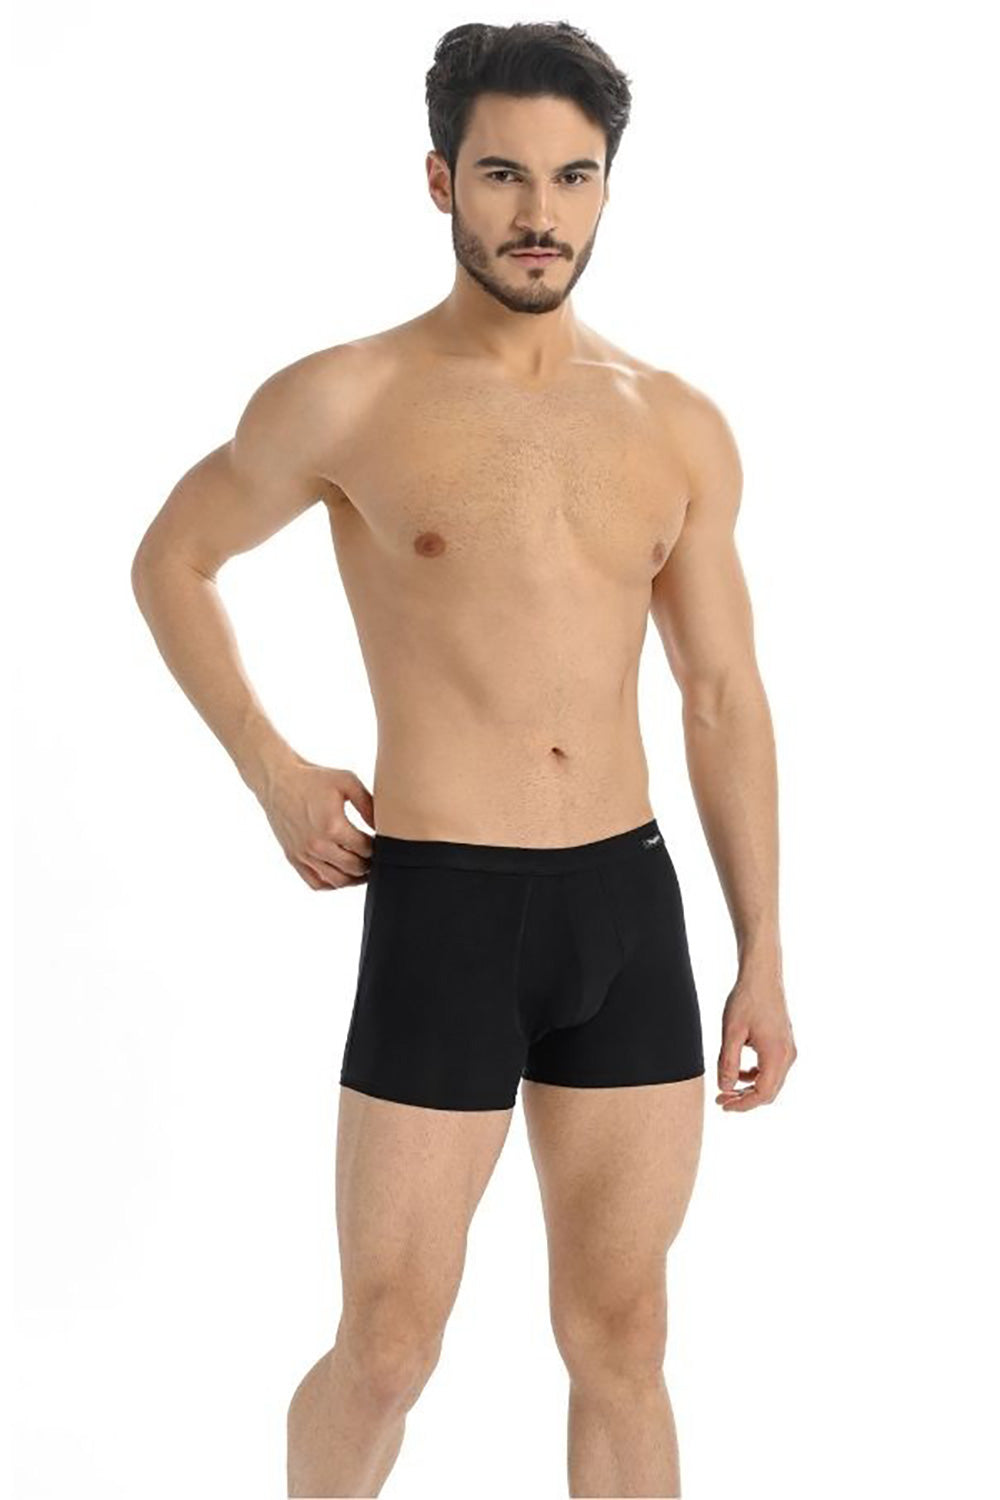 Set model 182972 Elsy Style Boxers Shorts, Slips, Swimming Briefs for Men